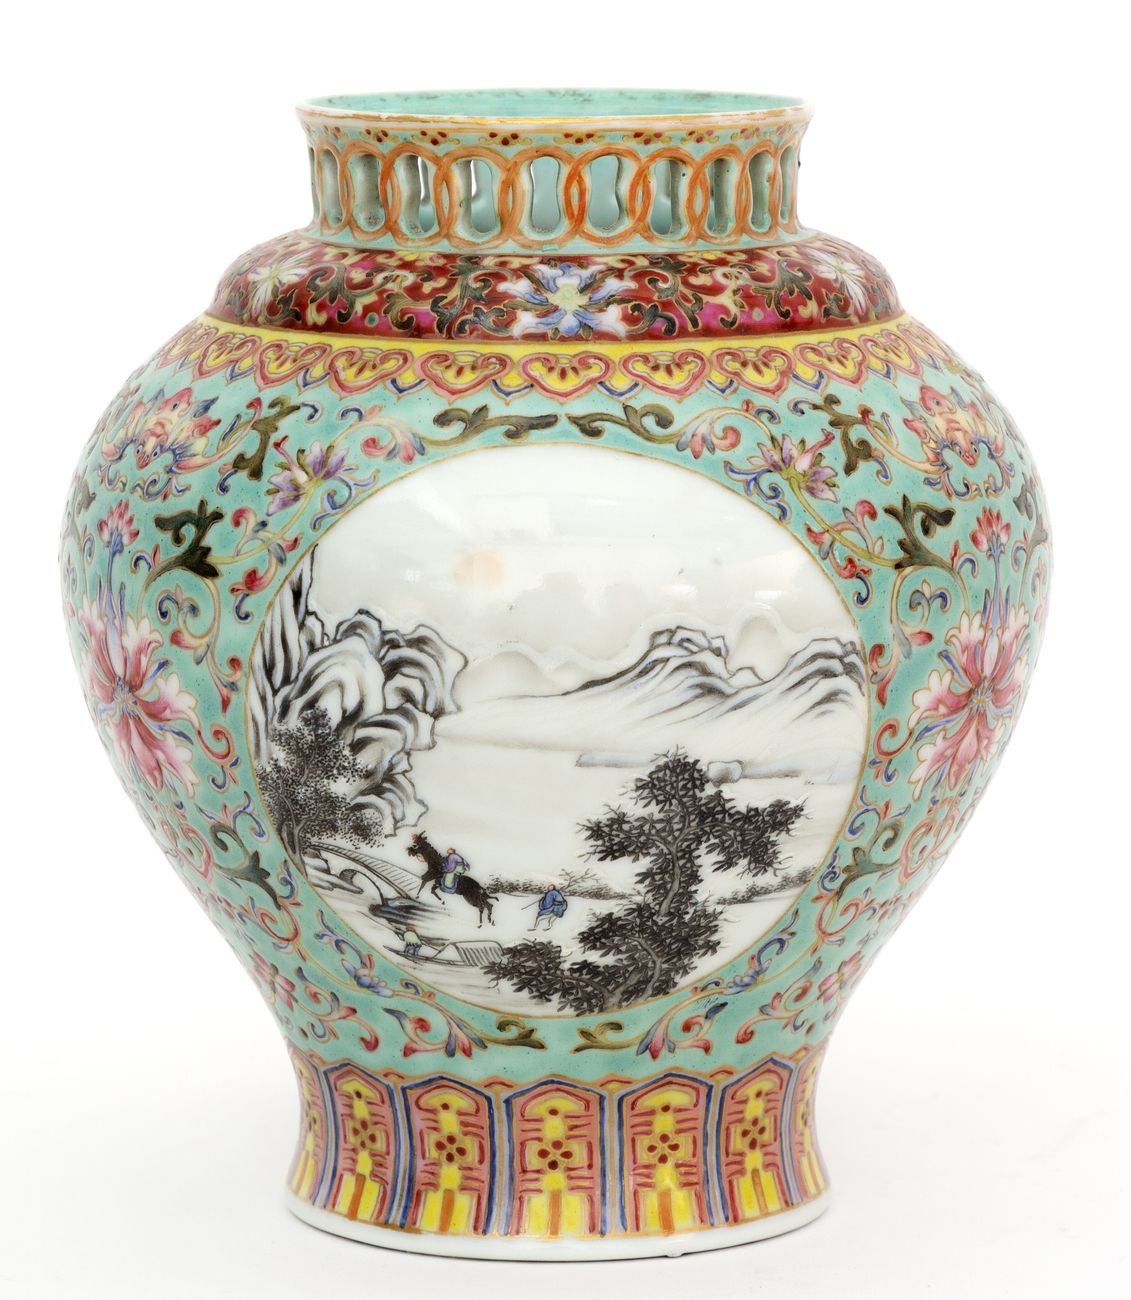 Null 中国，民国时期(1912-1949)
瓷器花瓶，法米勒珐琅彩装饰的动画山水图，颈部镂空。
伪造的乾隆款。
高度：19厘米